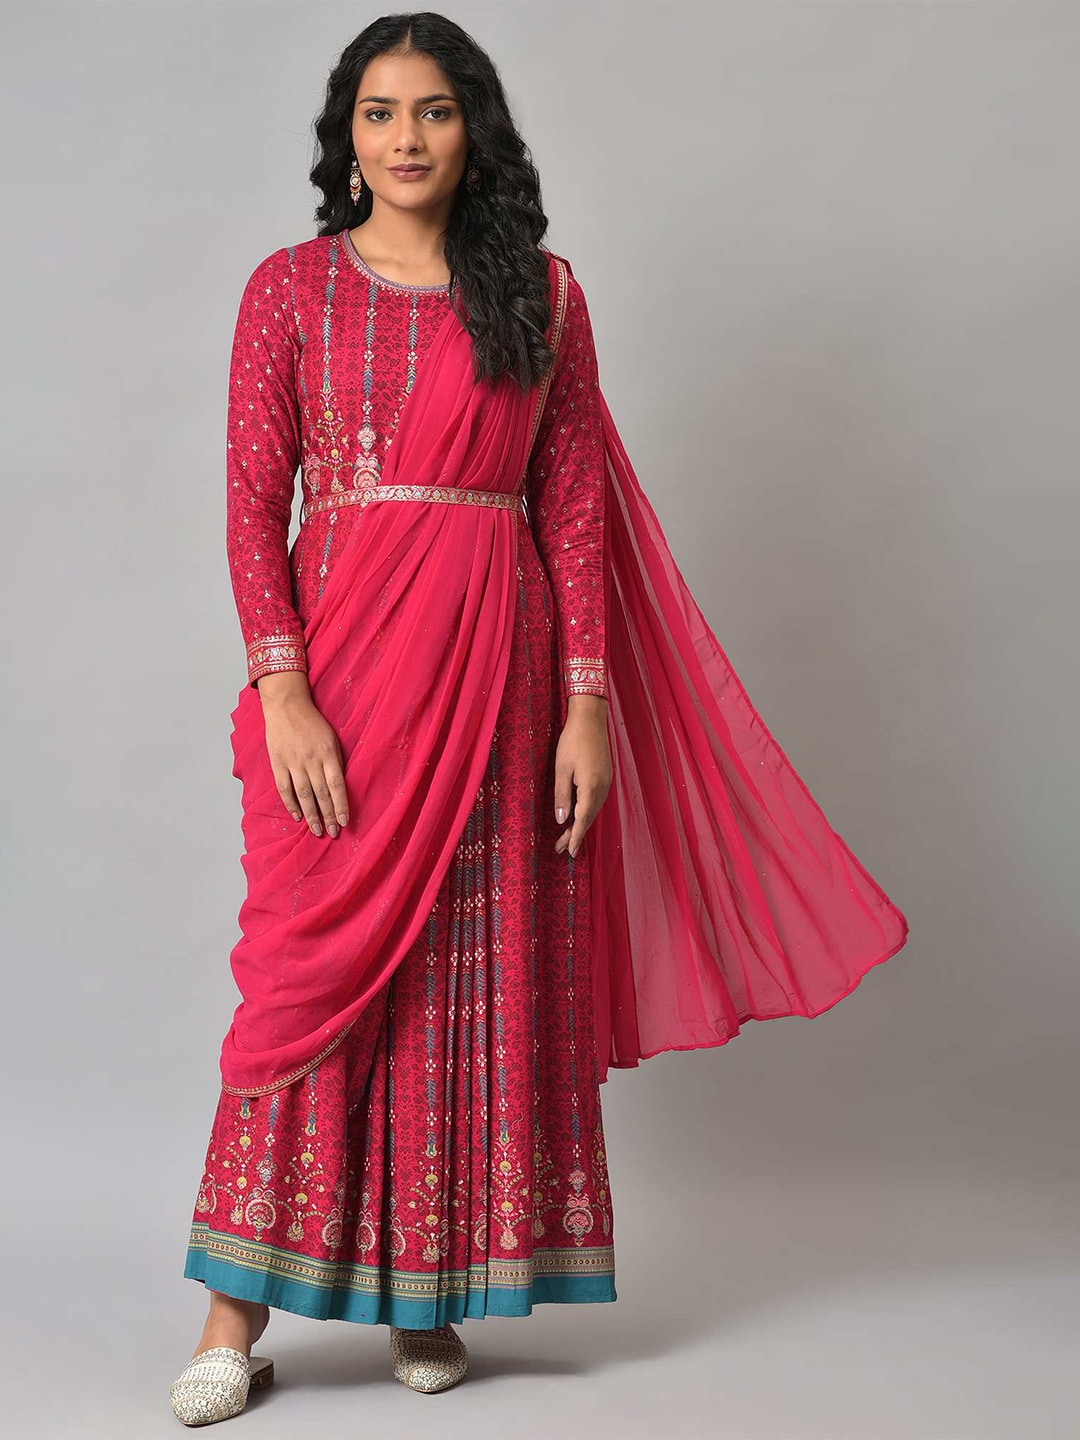 W Ethnic Motifs Maxi Dress Price in India